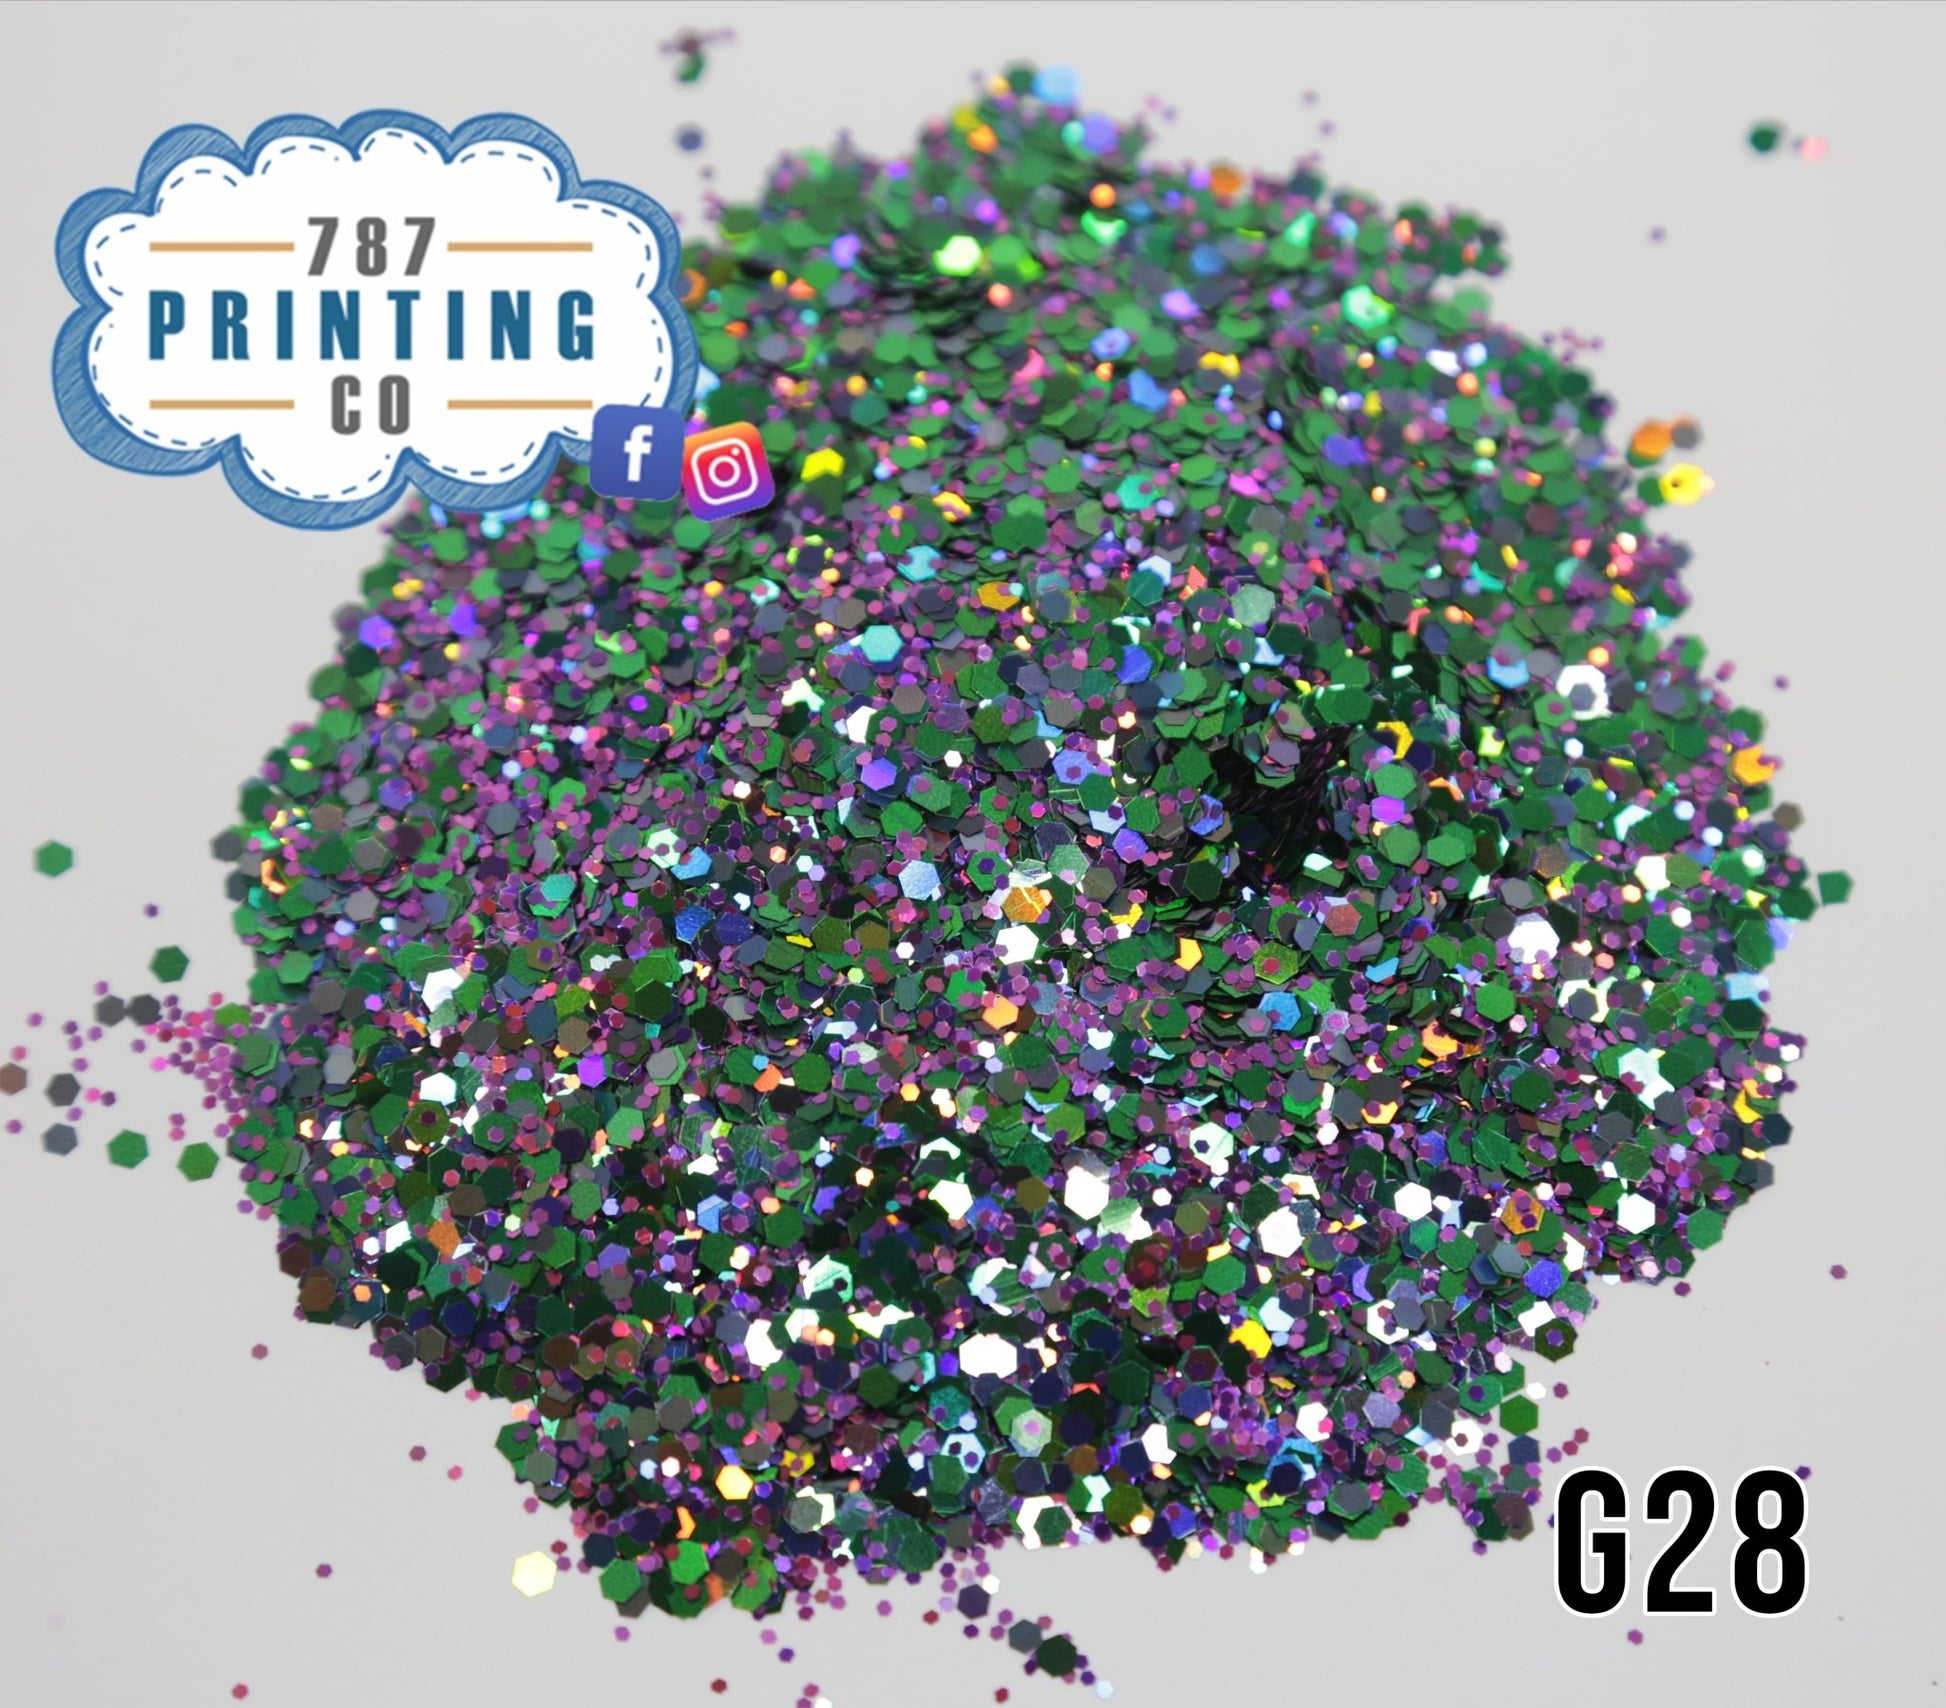 Carabalí Chunky Mix Glitter (G28) - 787 Printing Co.